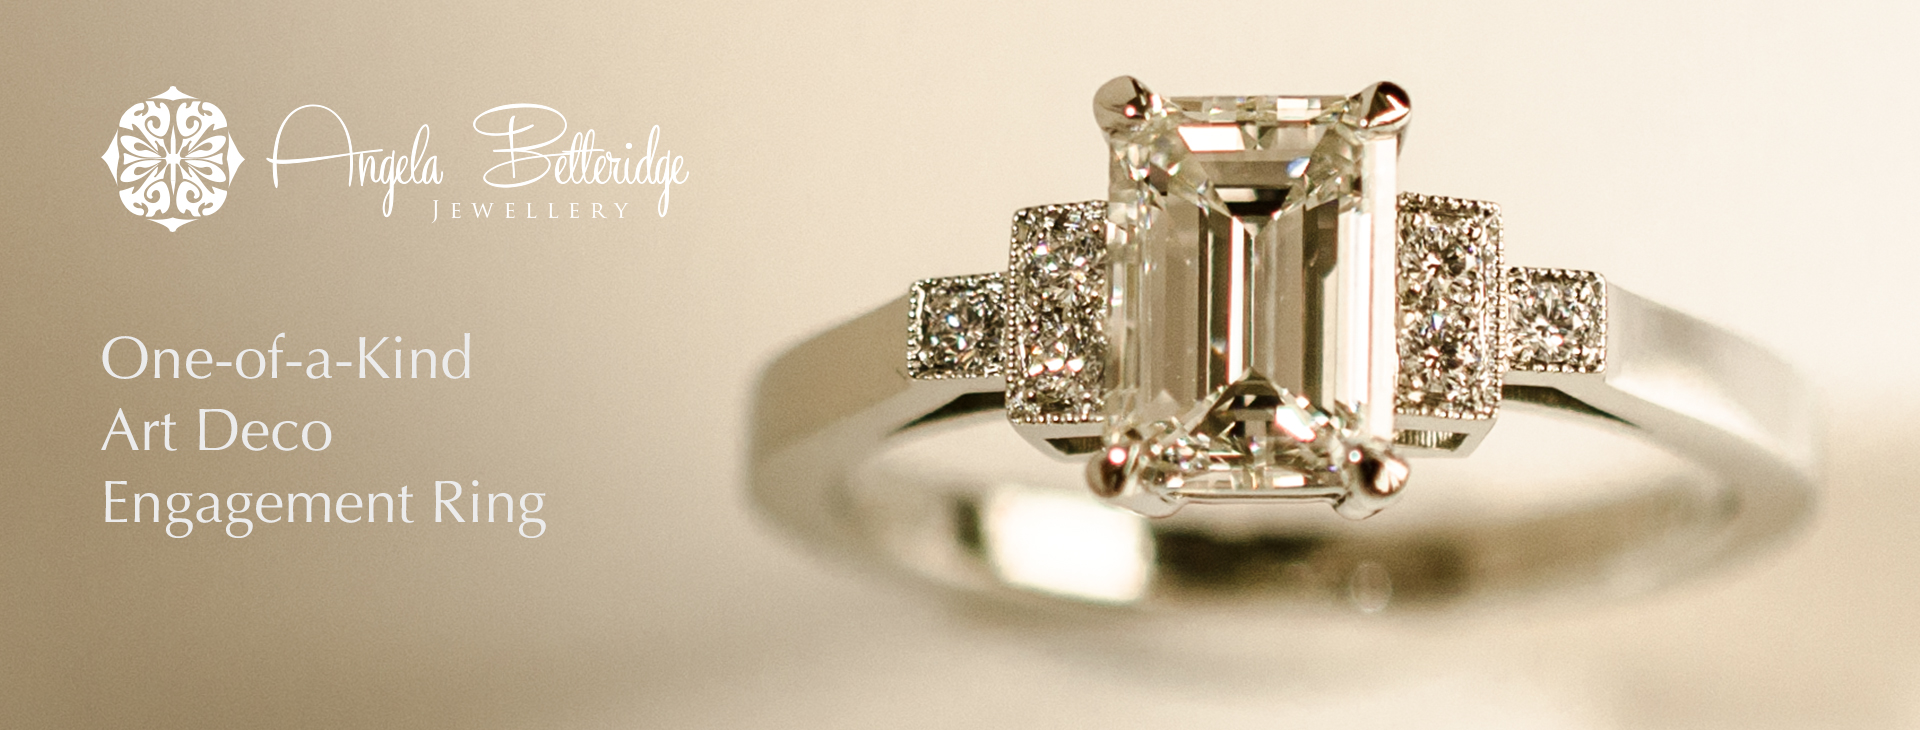 Angela Betteridge Jewellery Art Deco Engagement Ring